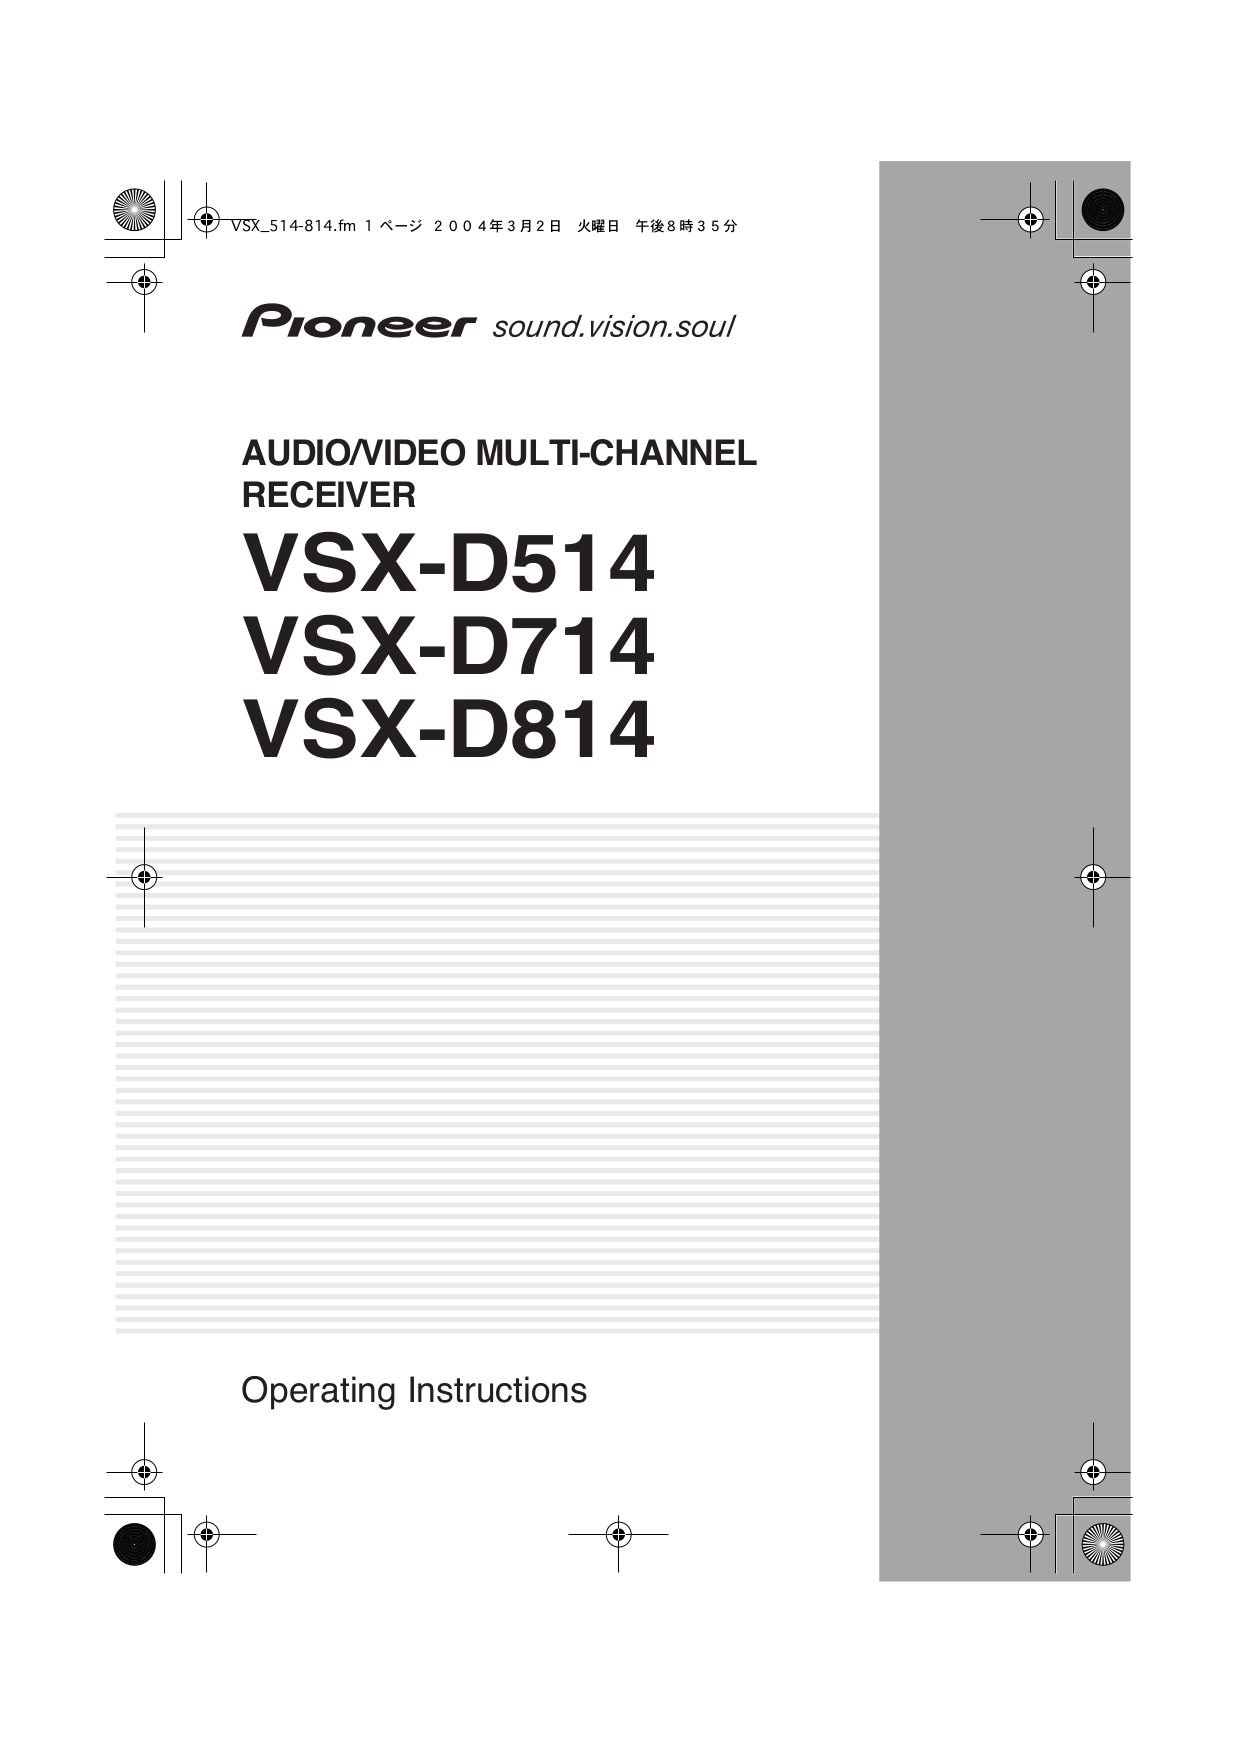 Download free pdf for Pioneer VSX-D514-K Receiver manual